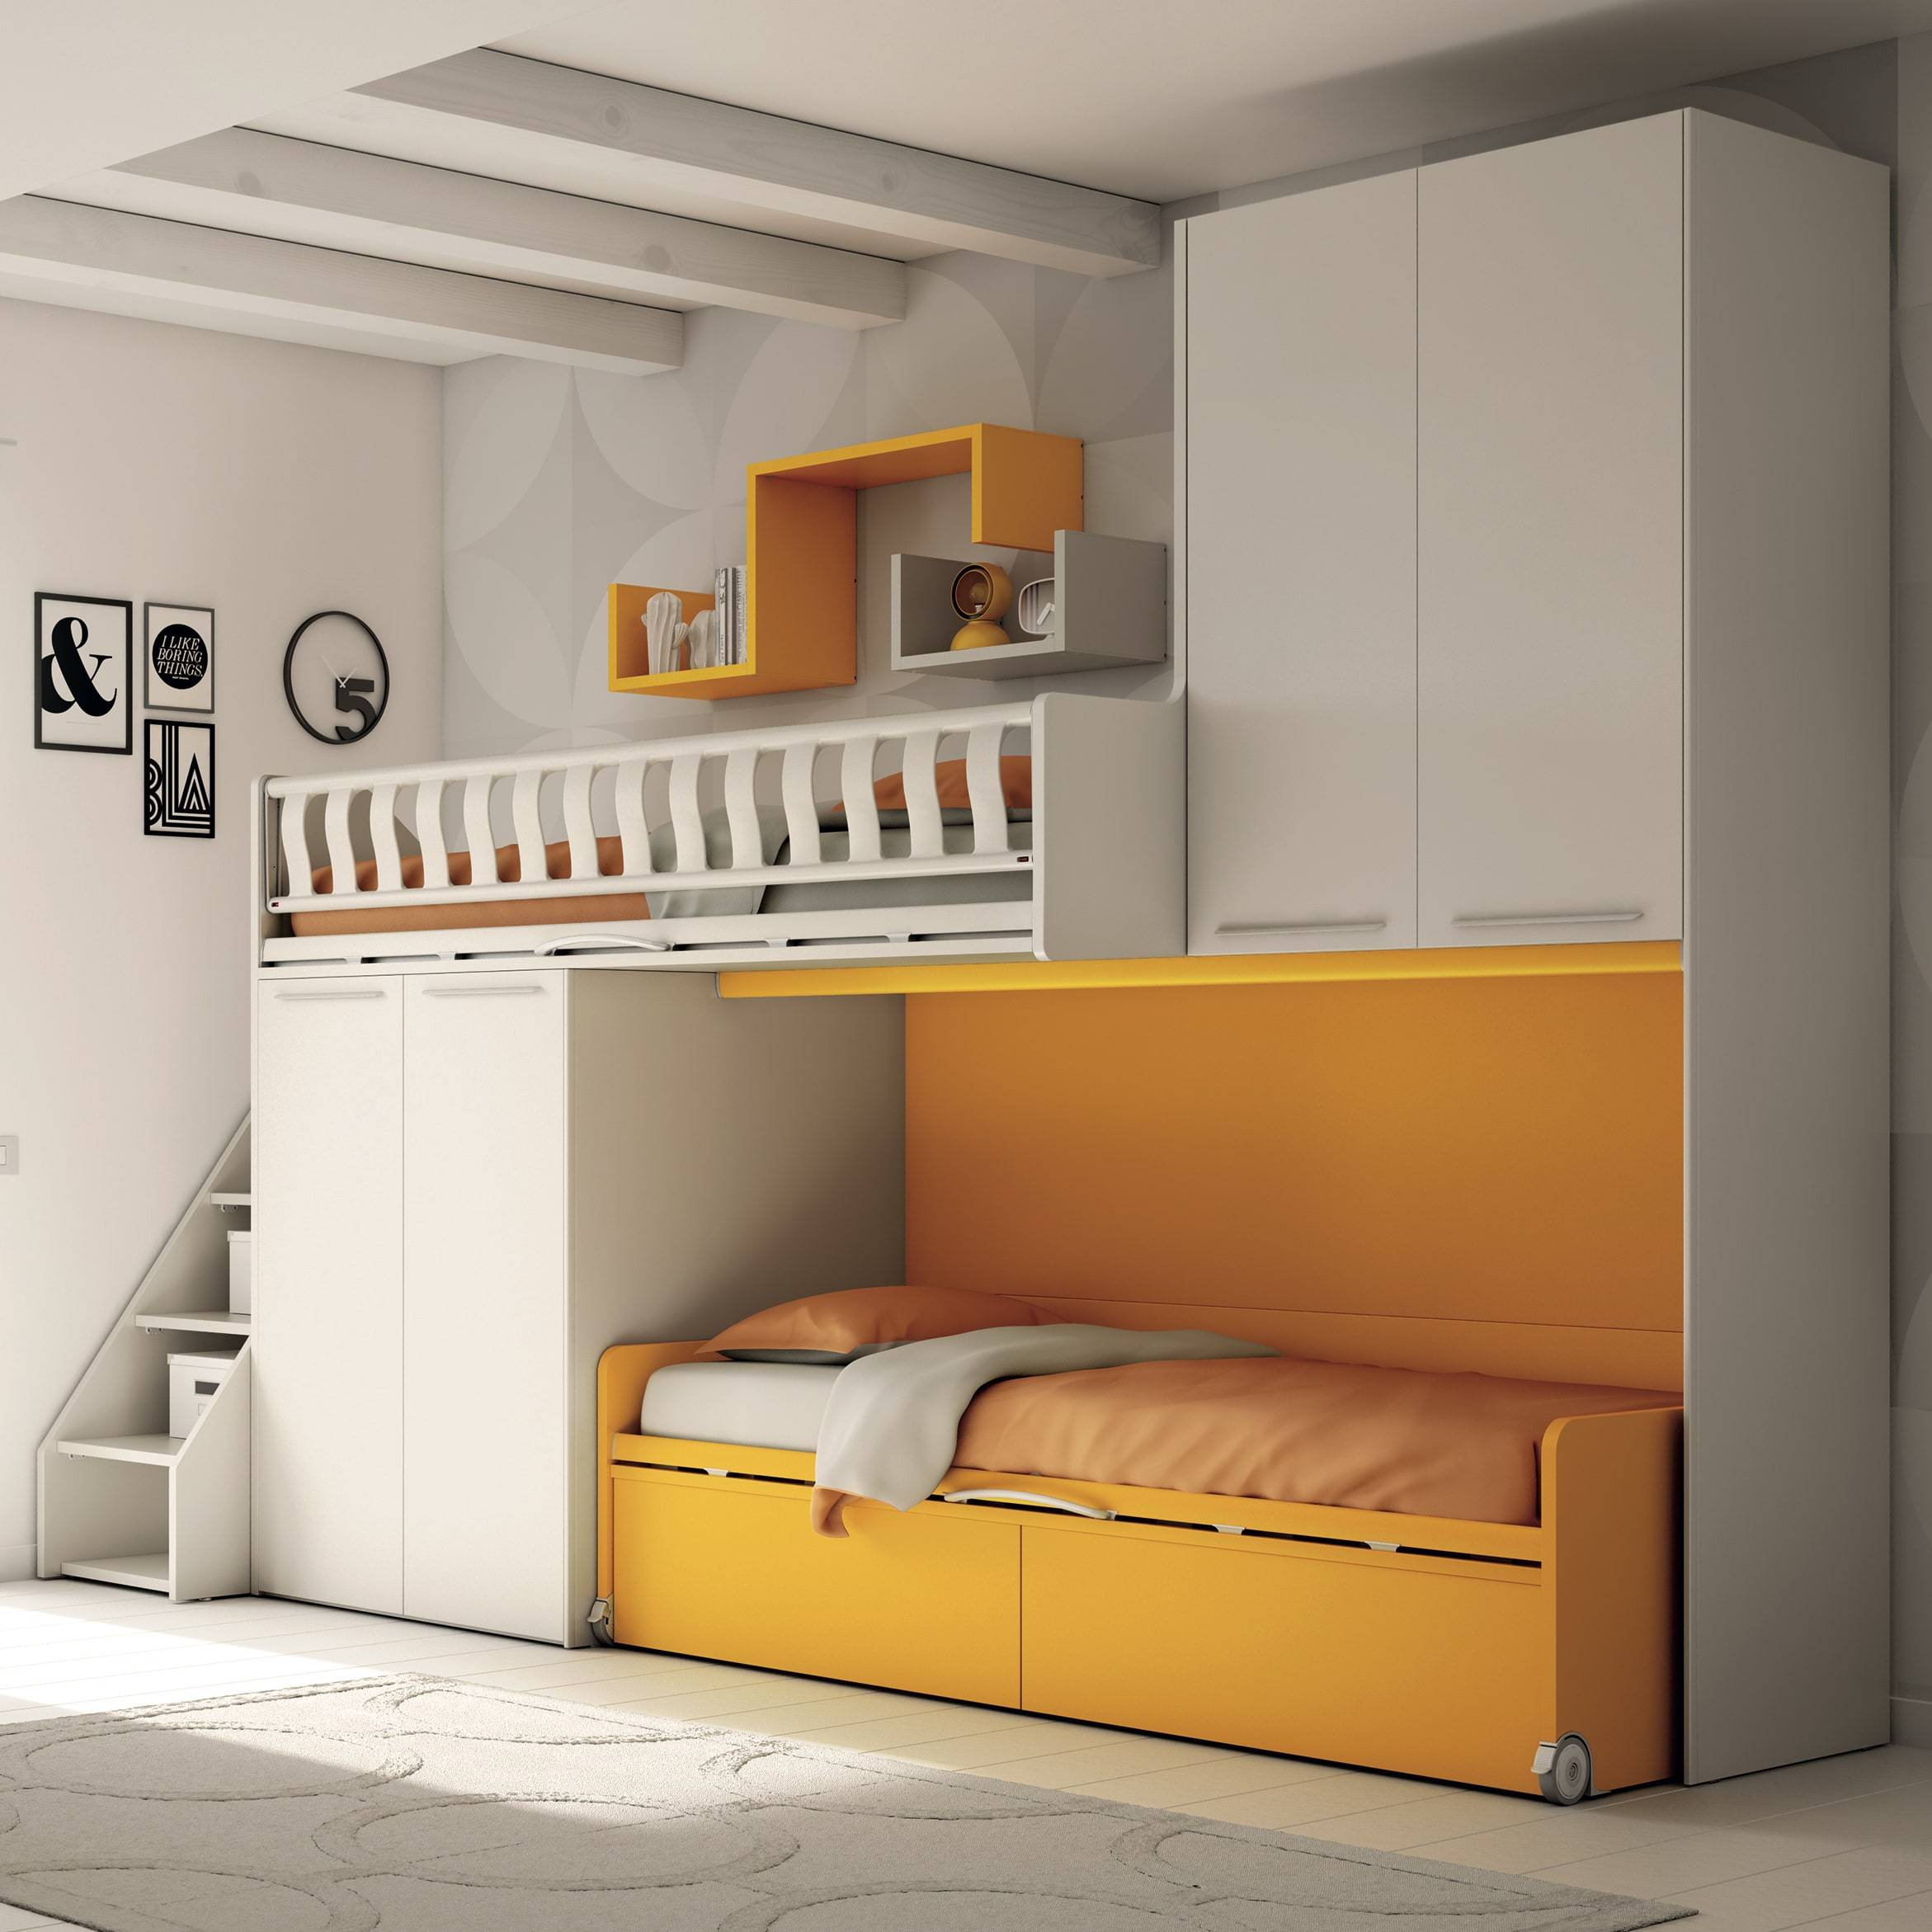 Spaceman Kids Beds Furniture space saving bunk beds loft beds trundle beds